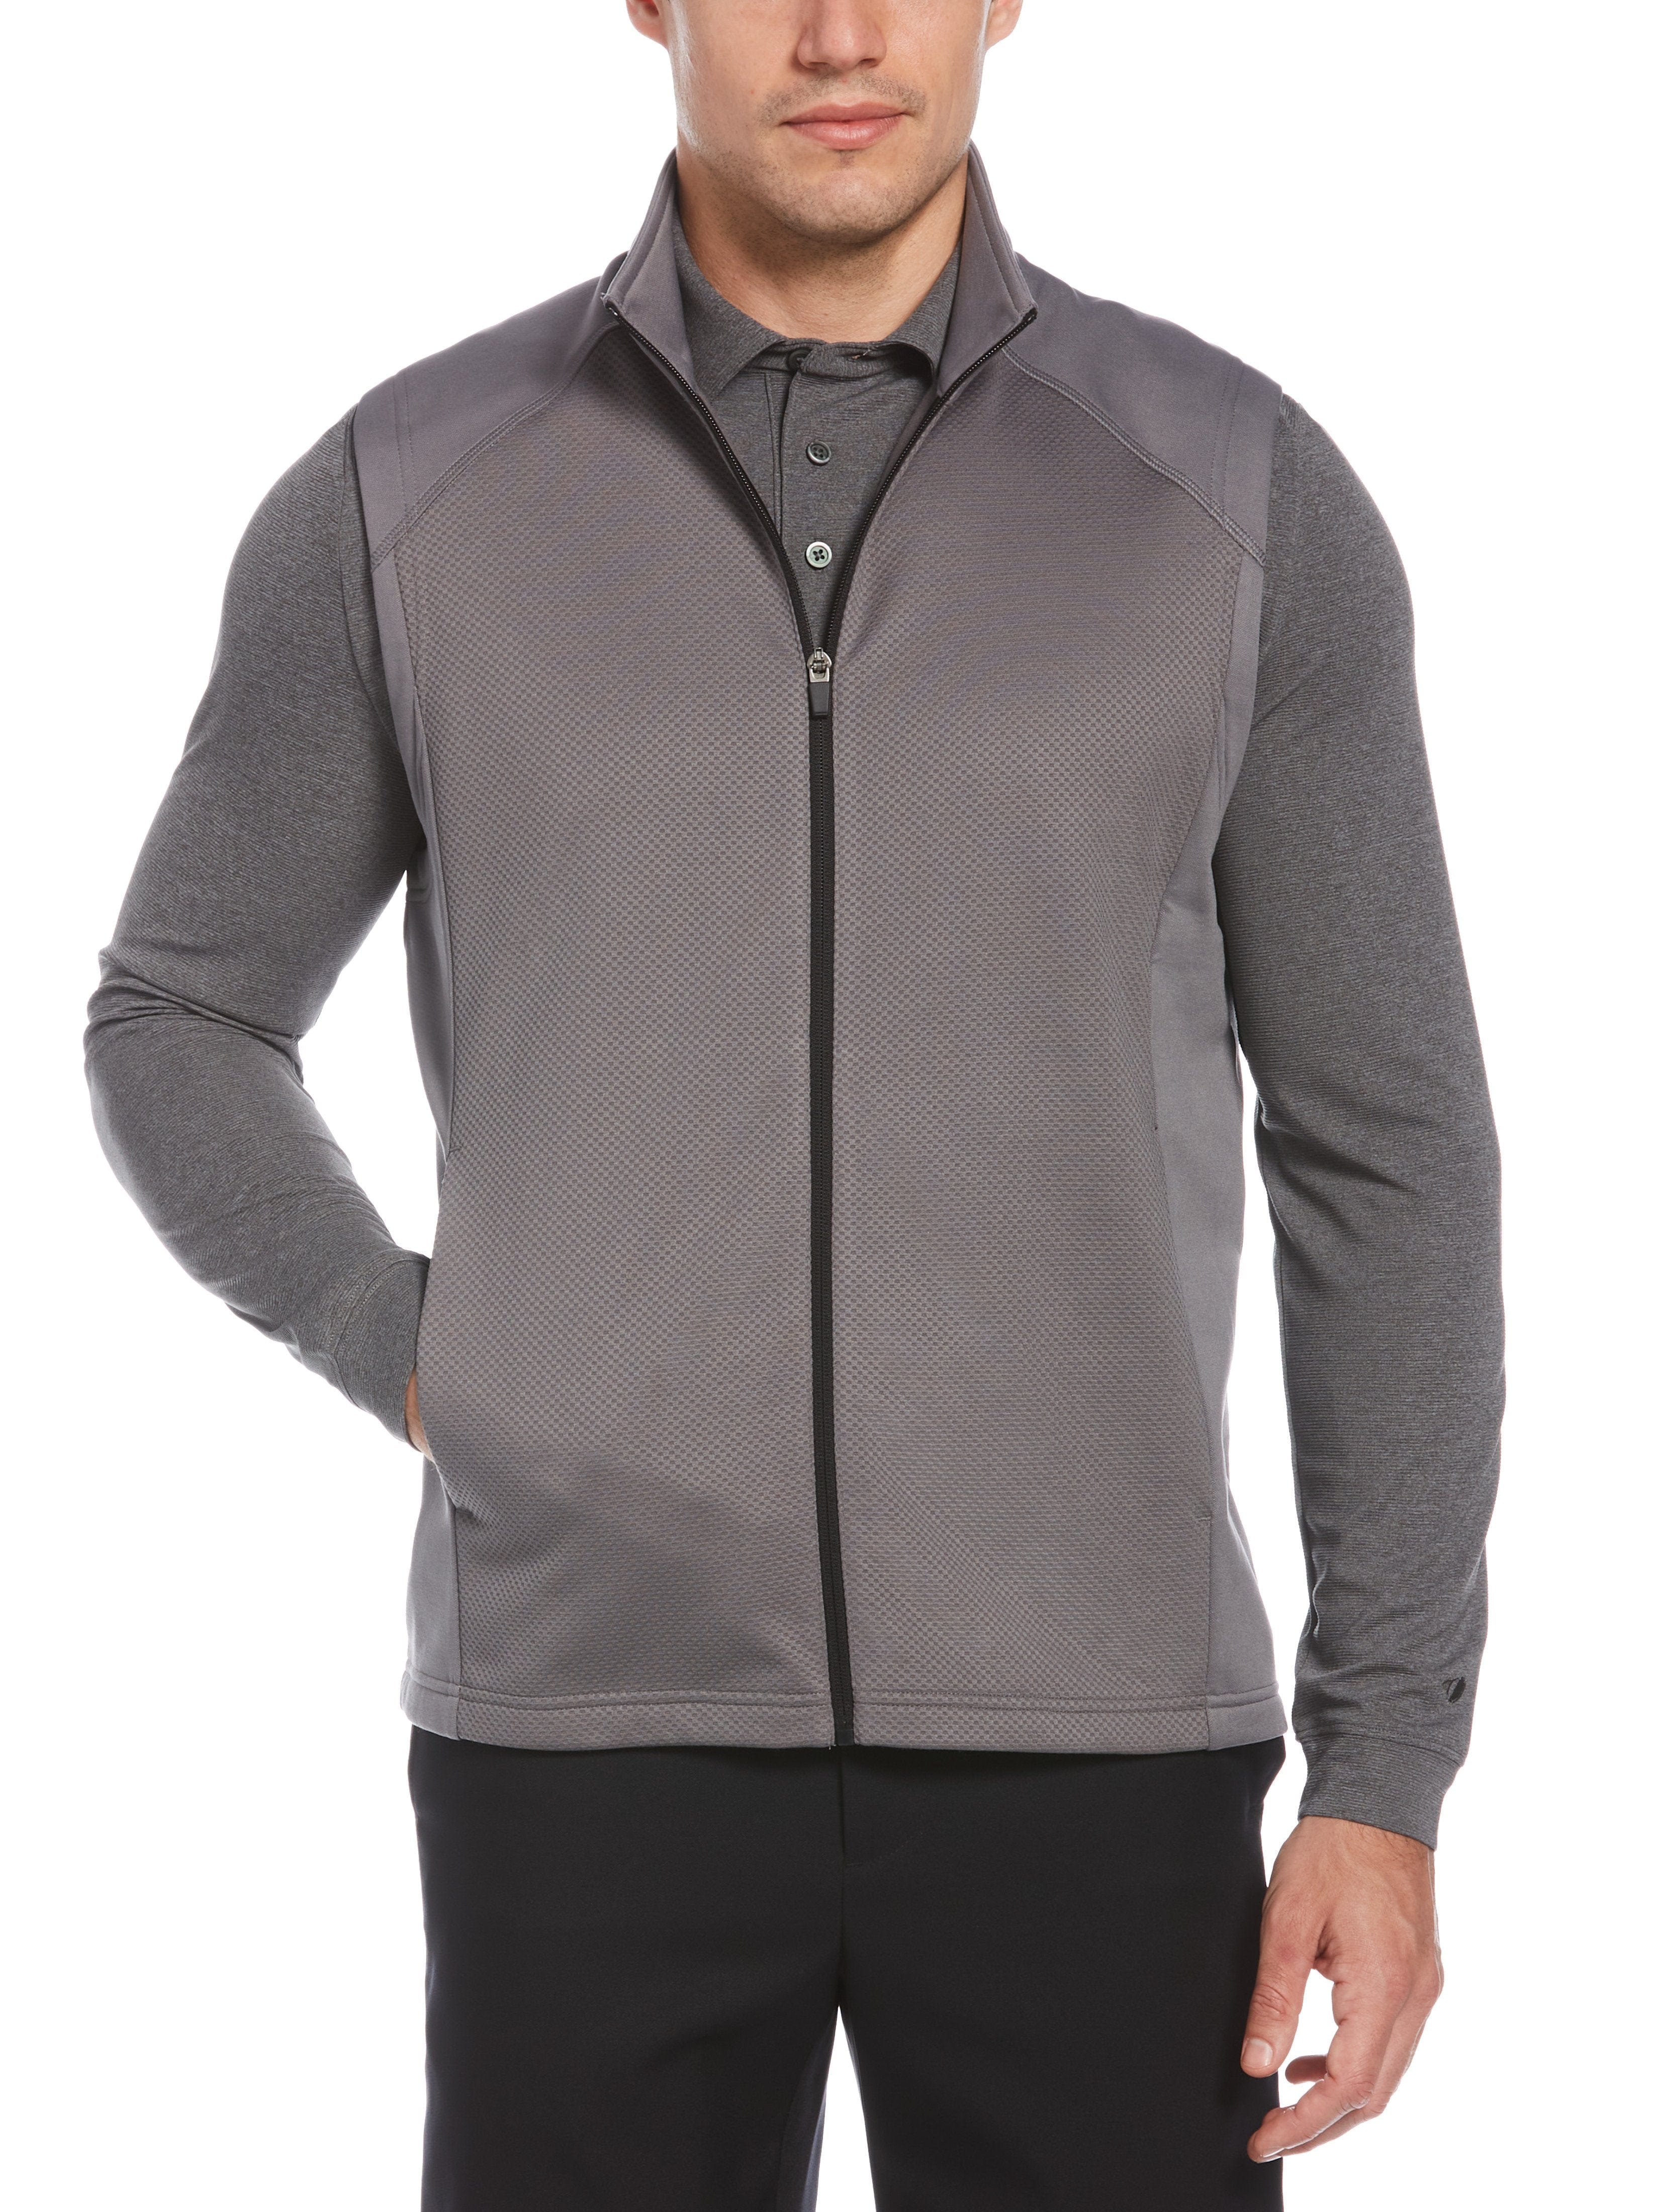 PGA TOUR Apparel Mens Mixed Texture Fleece Golf Vest Top, Size Small, Quiet Shade Gray, 100% Polyester | Golf Apparel Shop